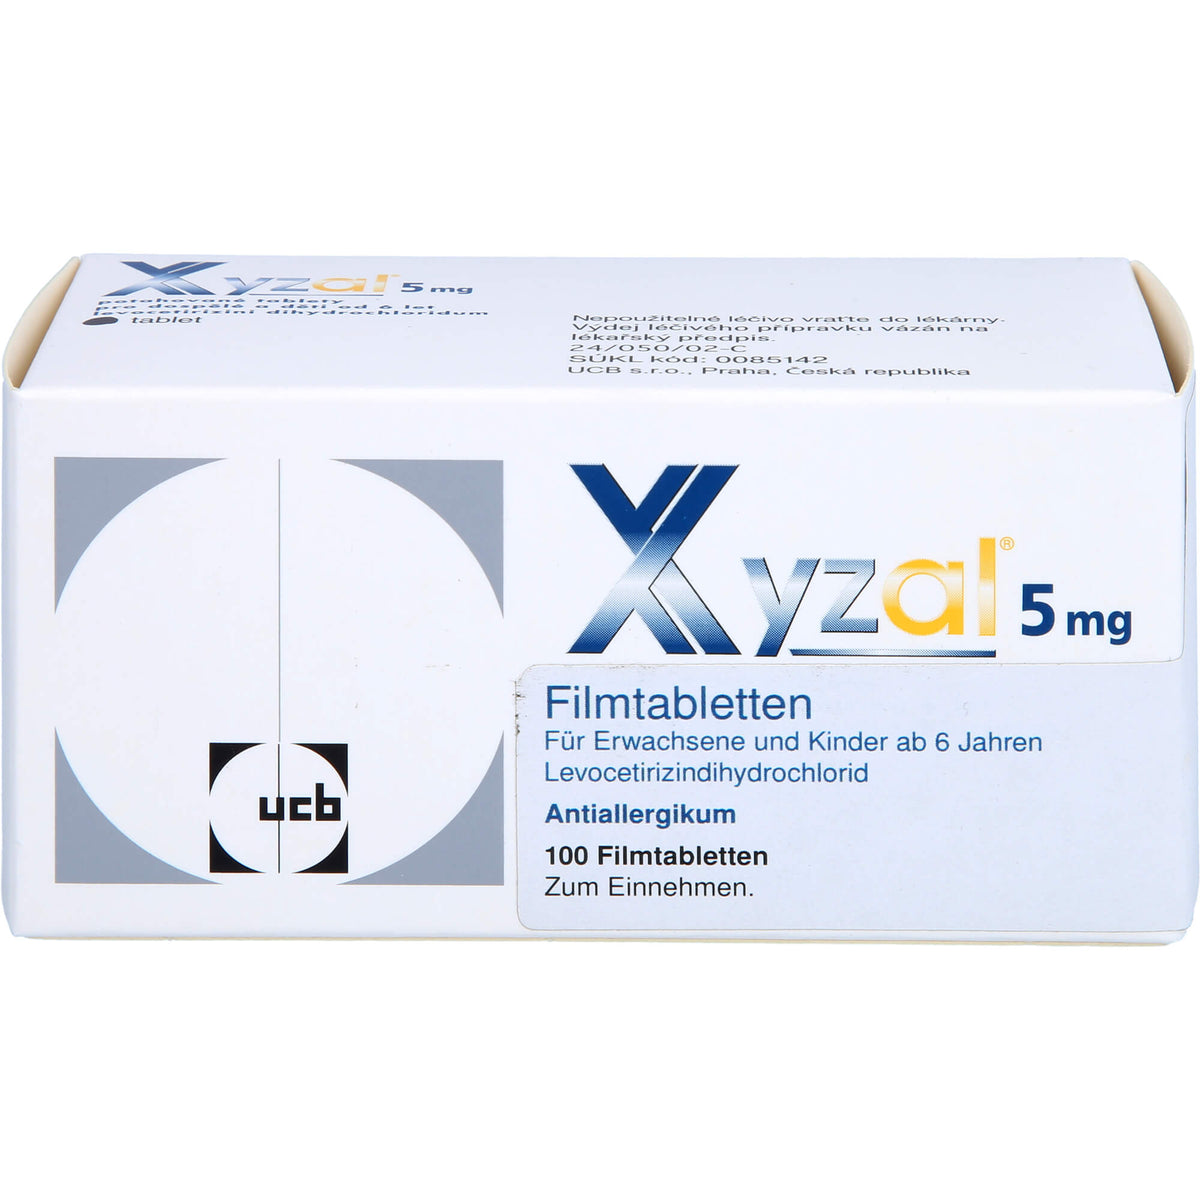 XYZALL 5 mg Filmtabletten Antiallergikum, 100 pc Tablettes ...